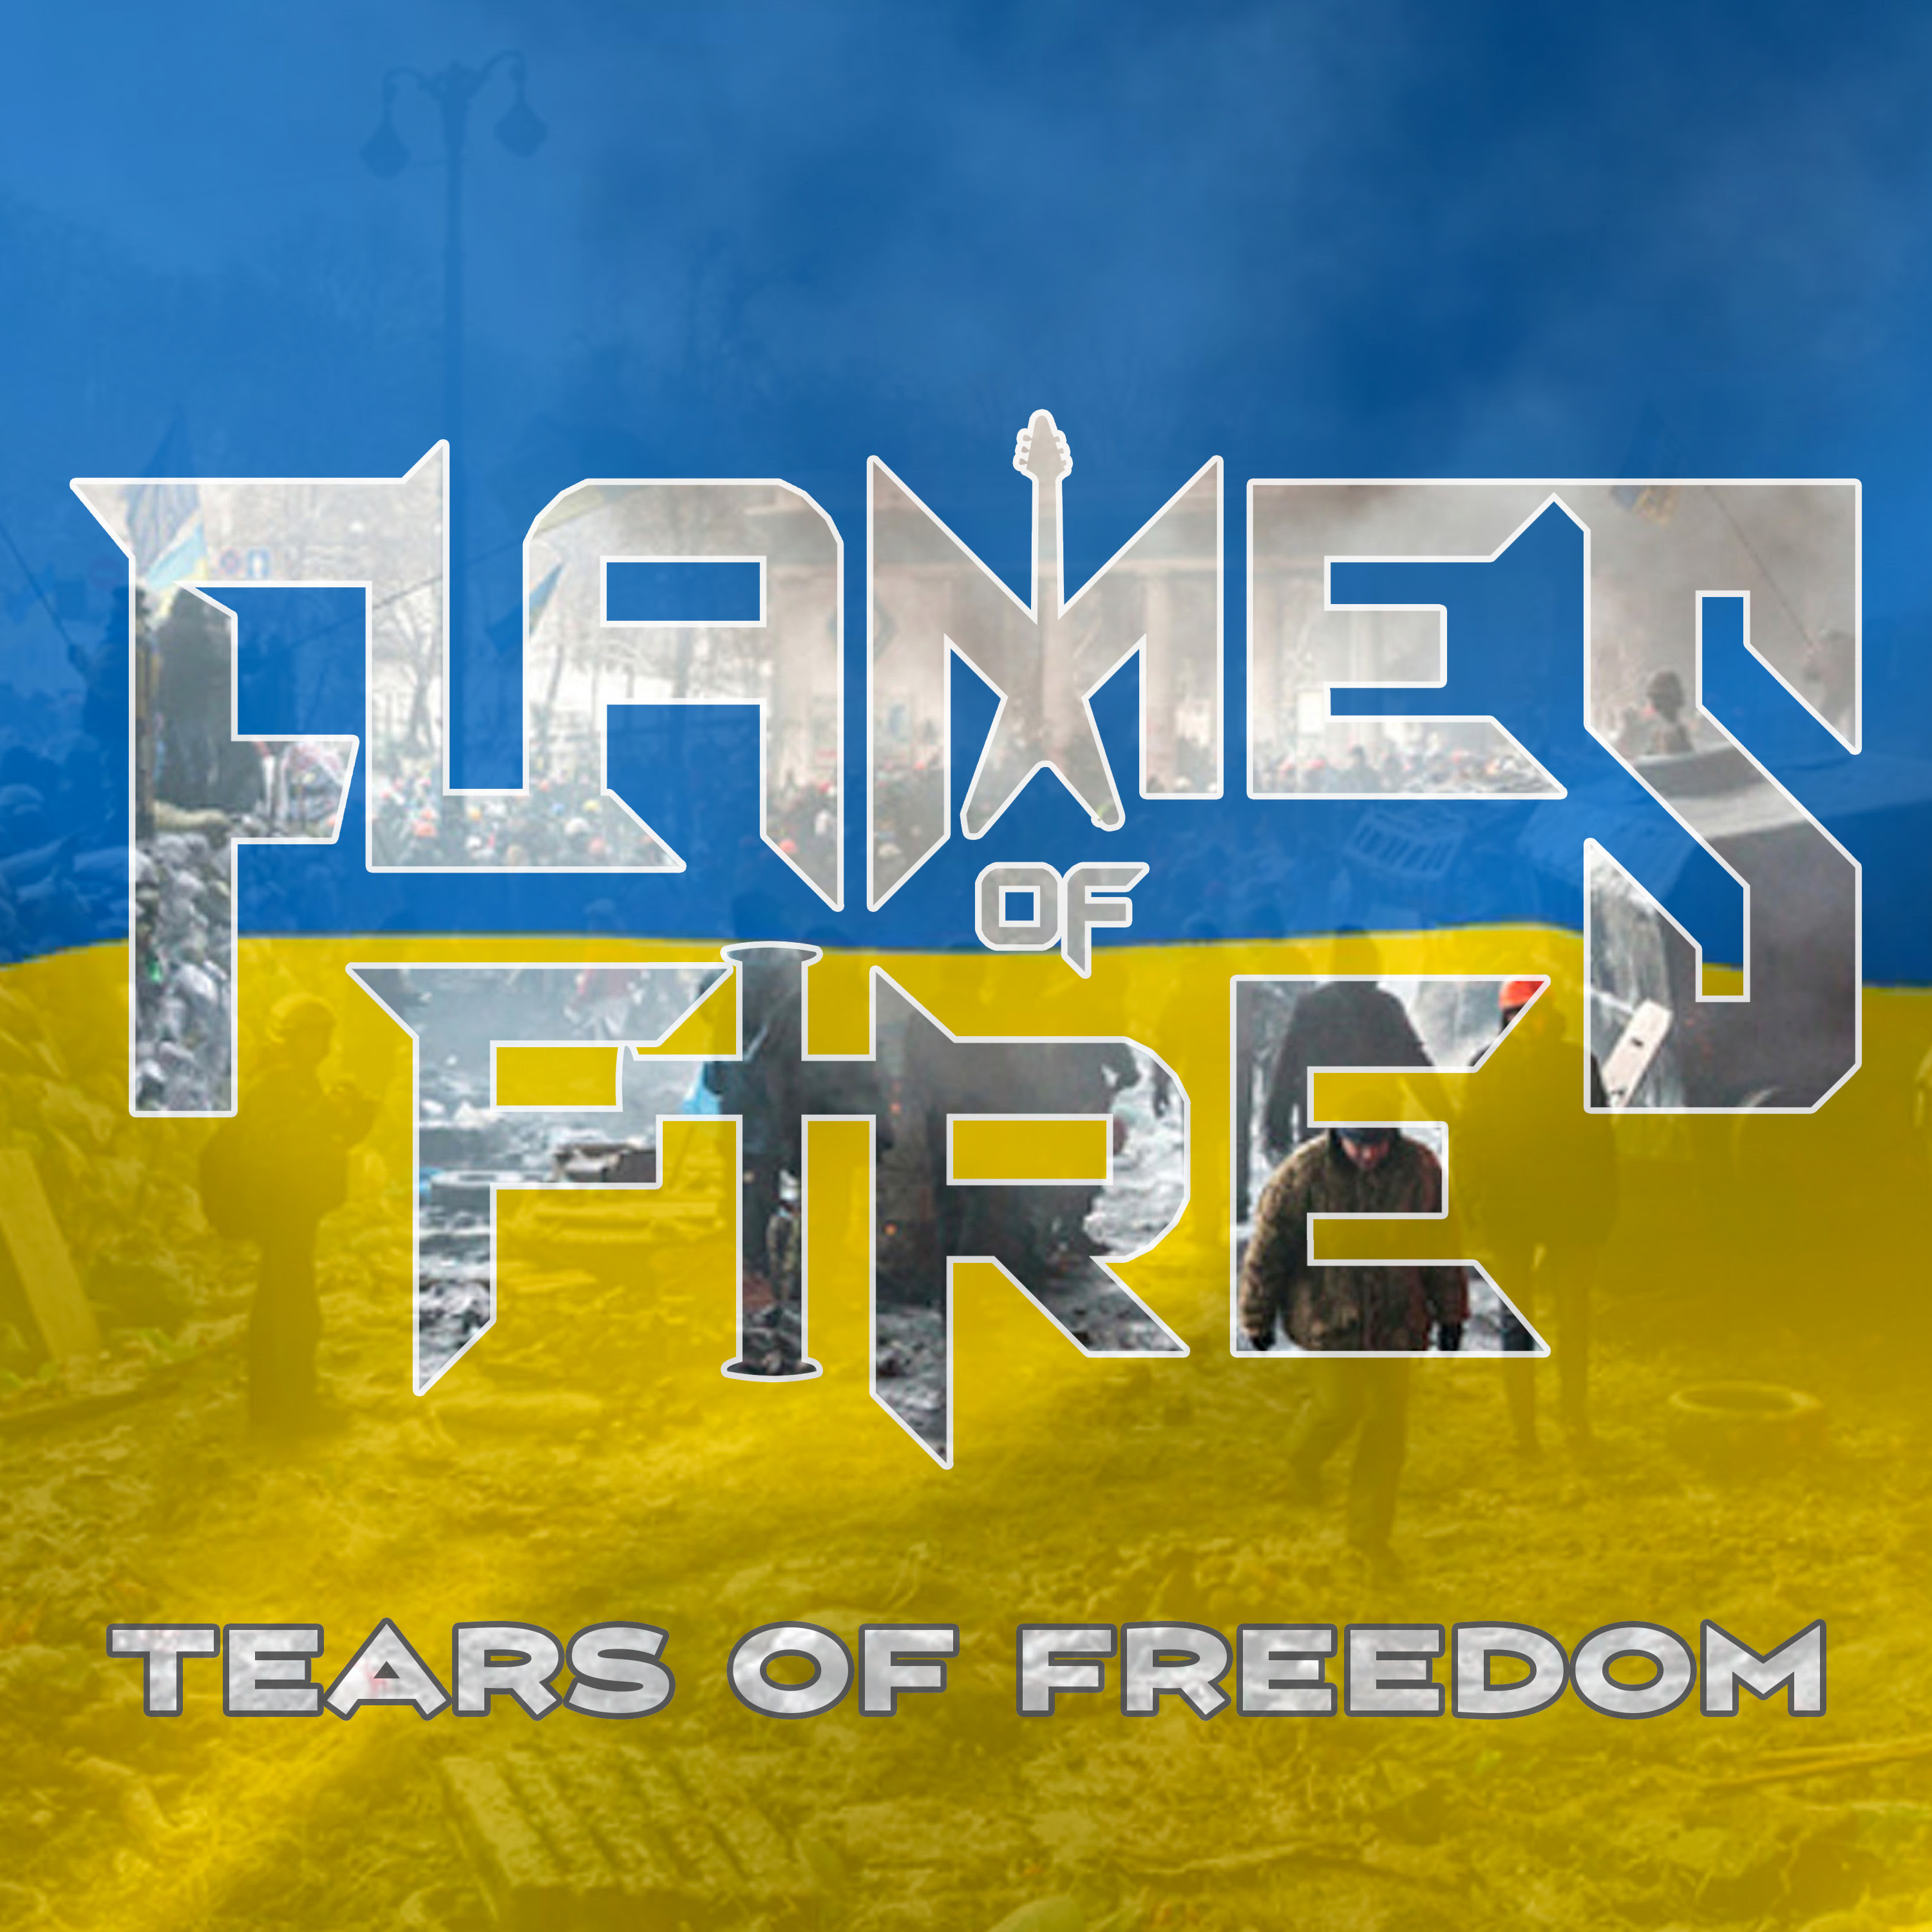 Flames Of Fire: grupo sueco lança “Tears Of Freedom”, single de apoio a Ucrânia